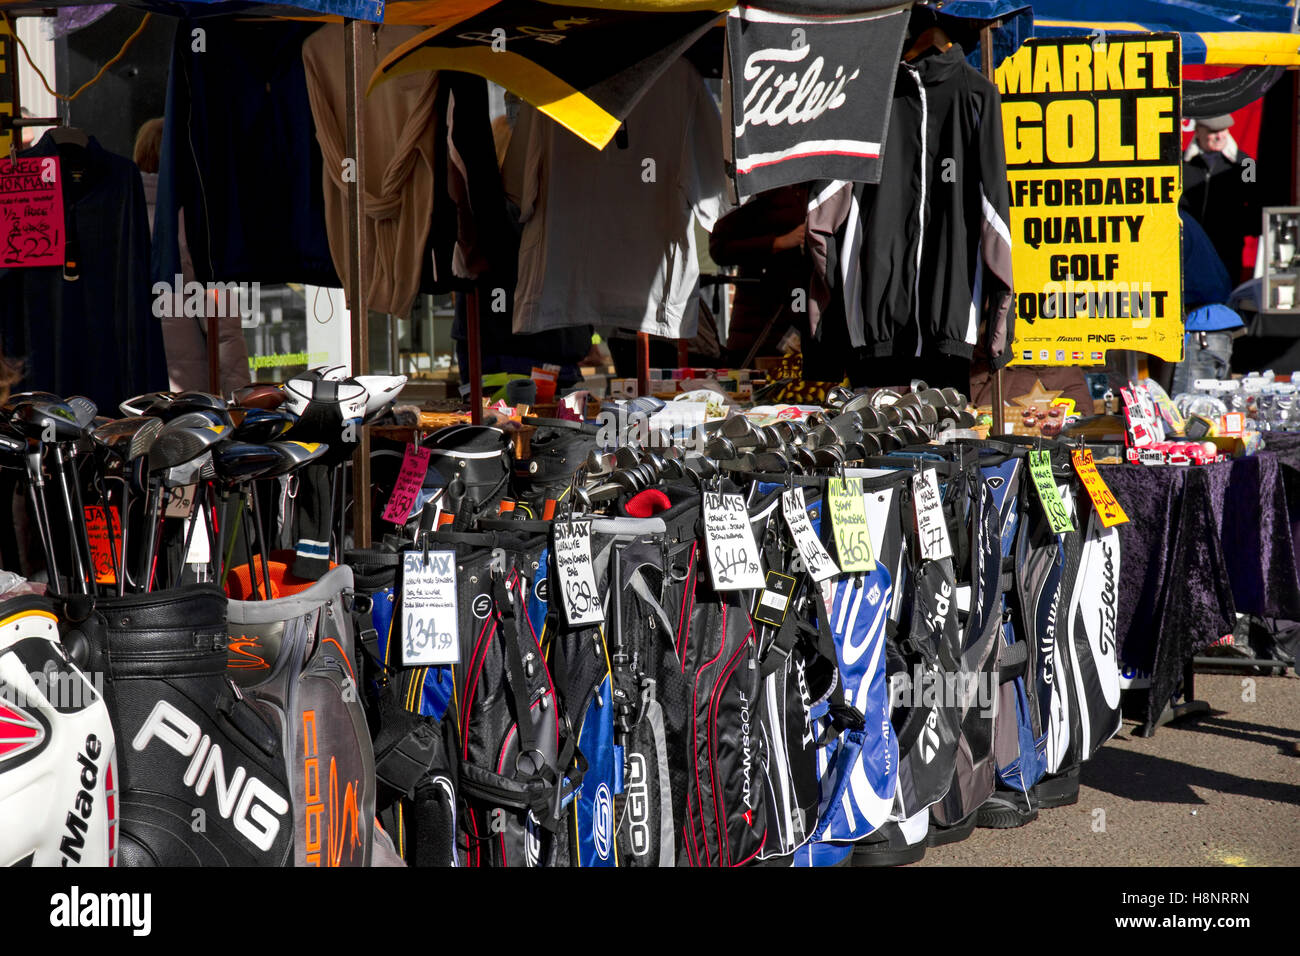 Golf equipment stall at St Albans Market, St Peters Street, St Albans, Hertfordshire, England, UK Stock Photo